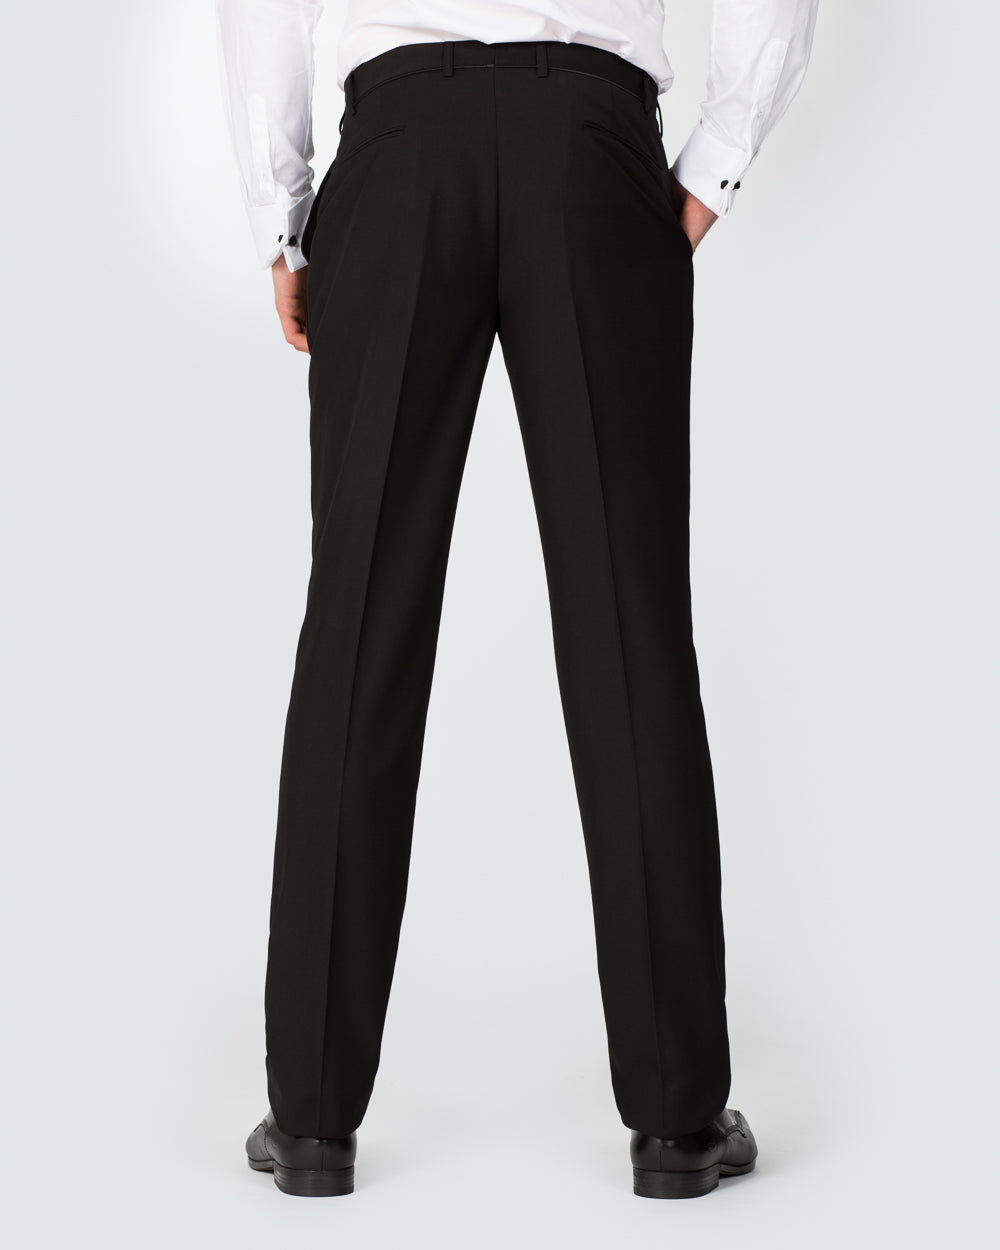 Skopes Slim Fit Tall Dinner Suit (black)